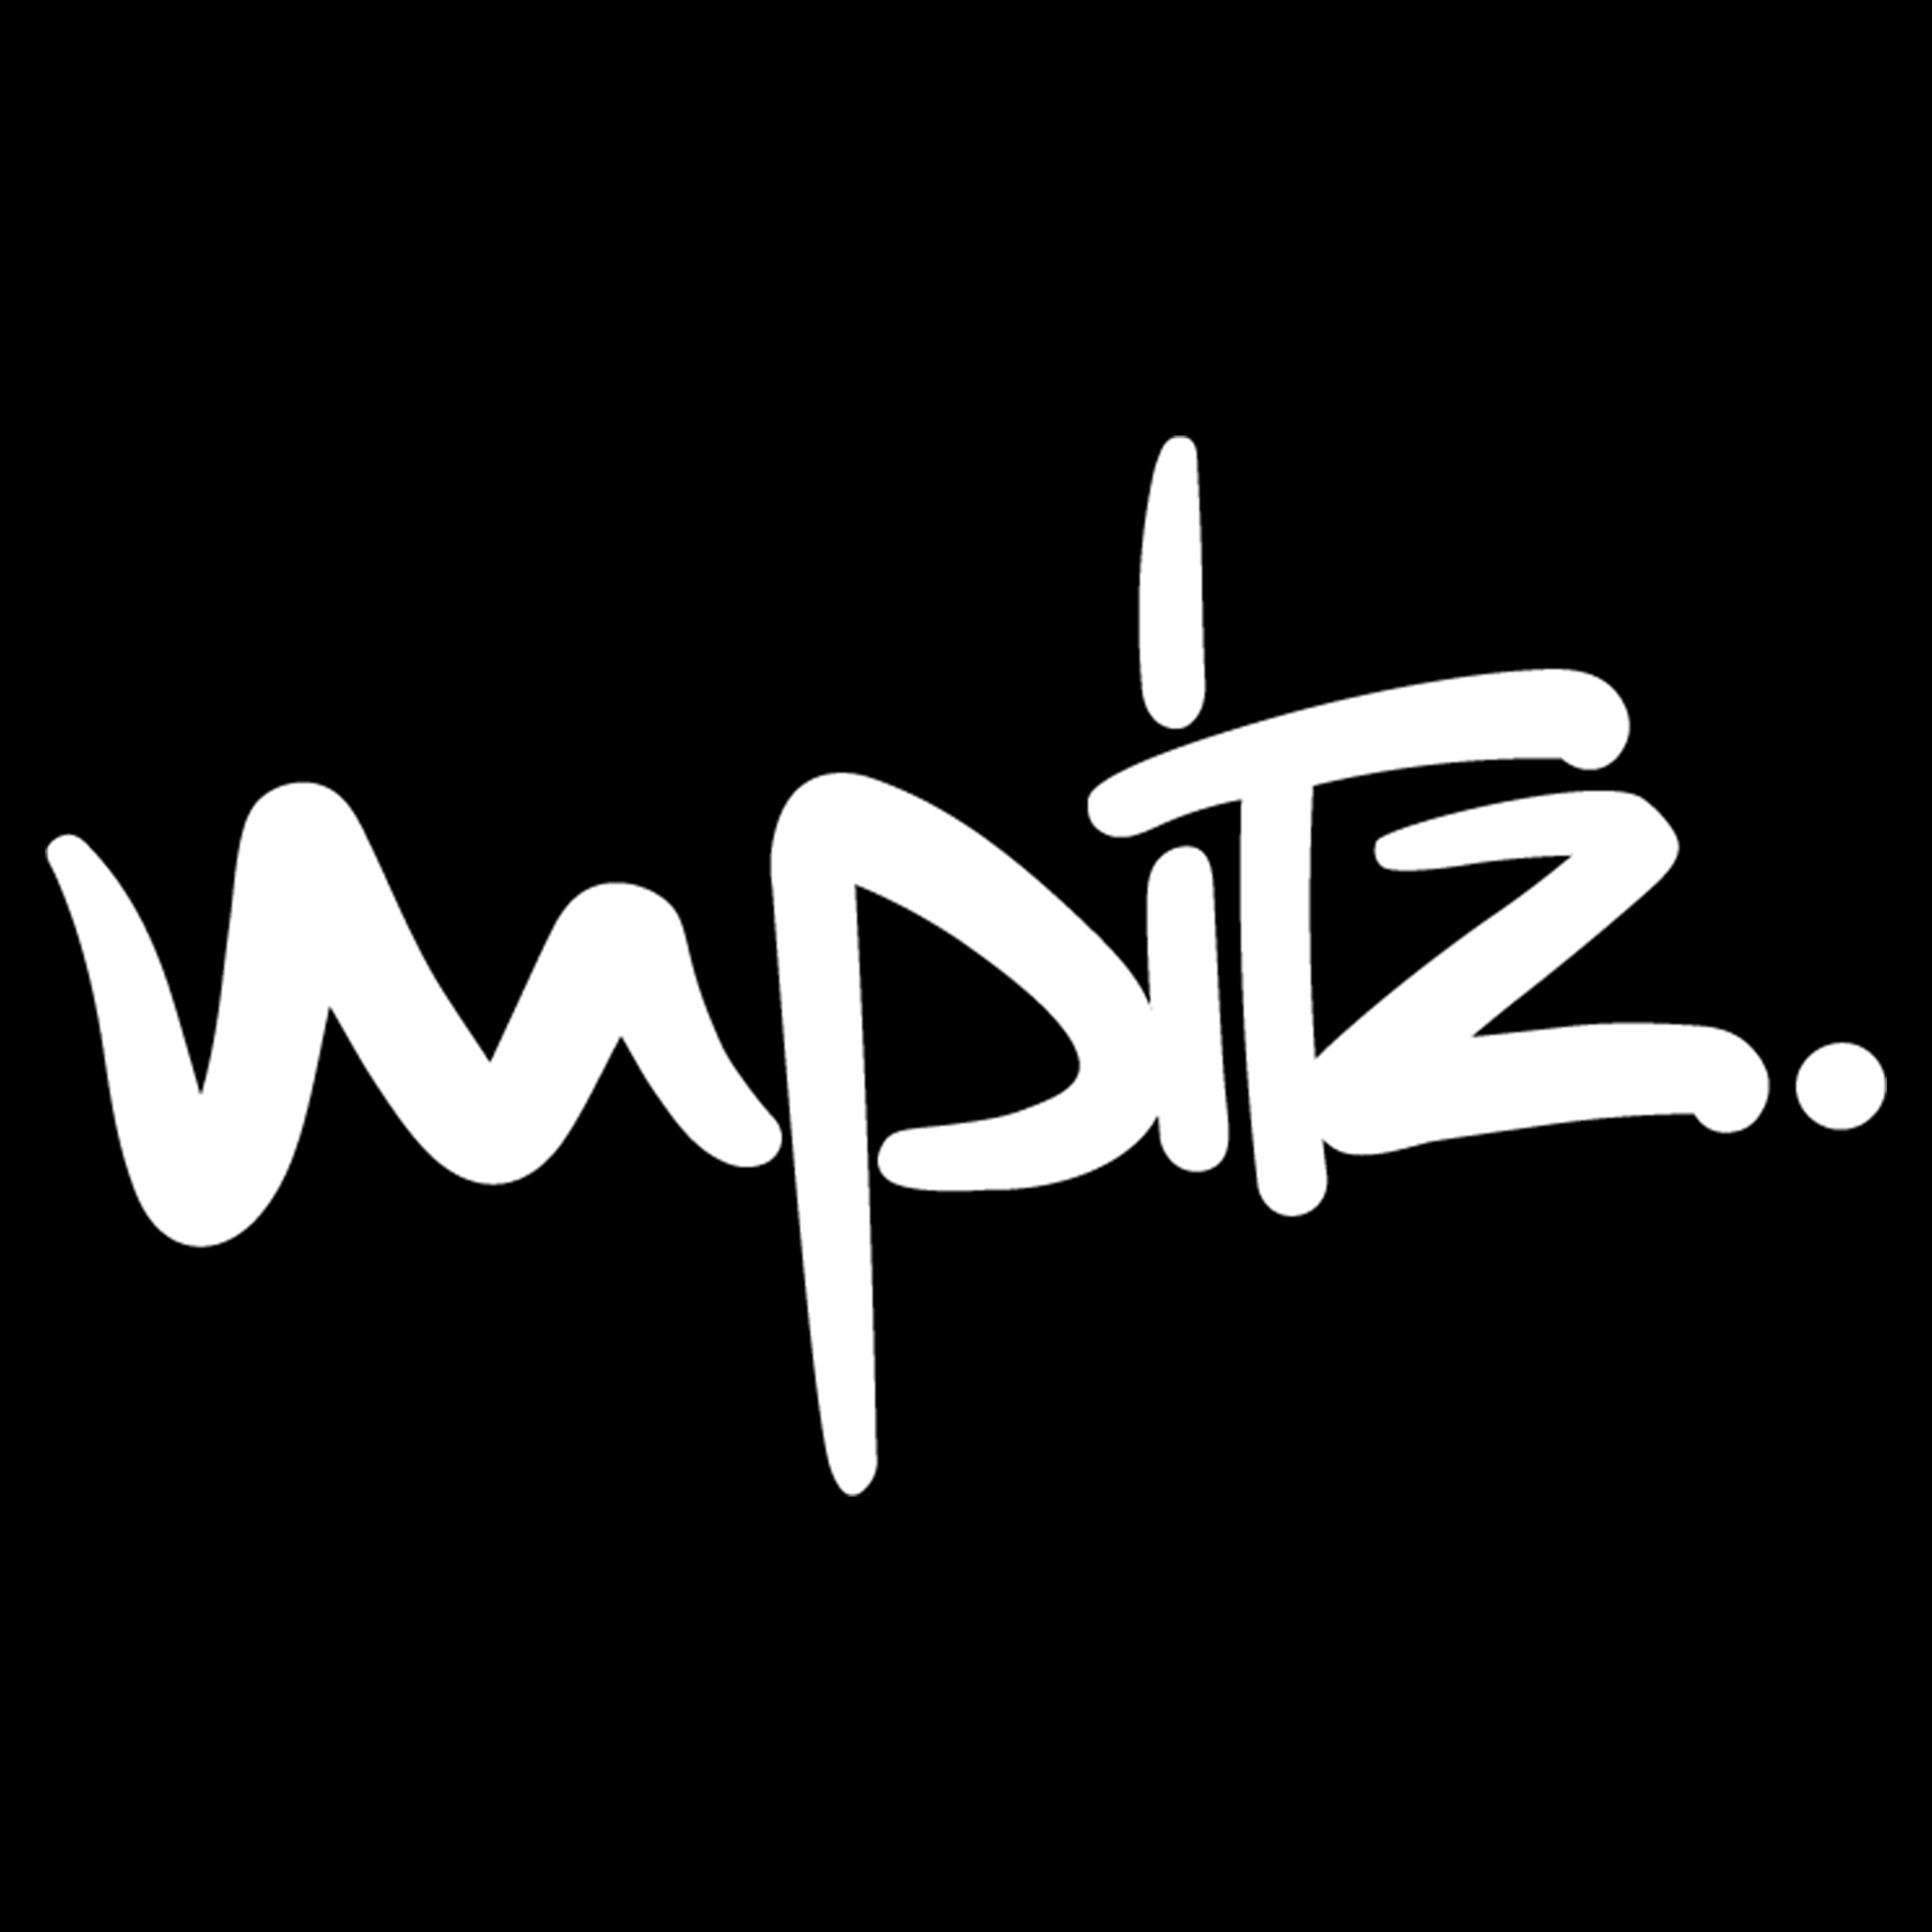 Word "mpitz" as a logo, stylized white graffiti tag on a black background.